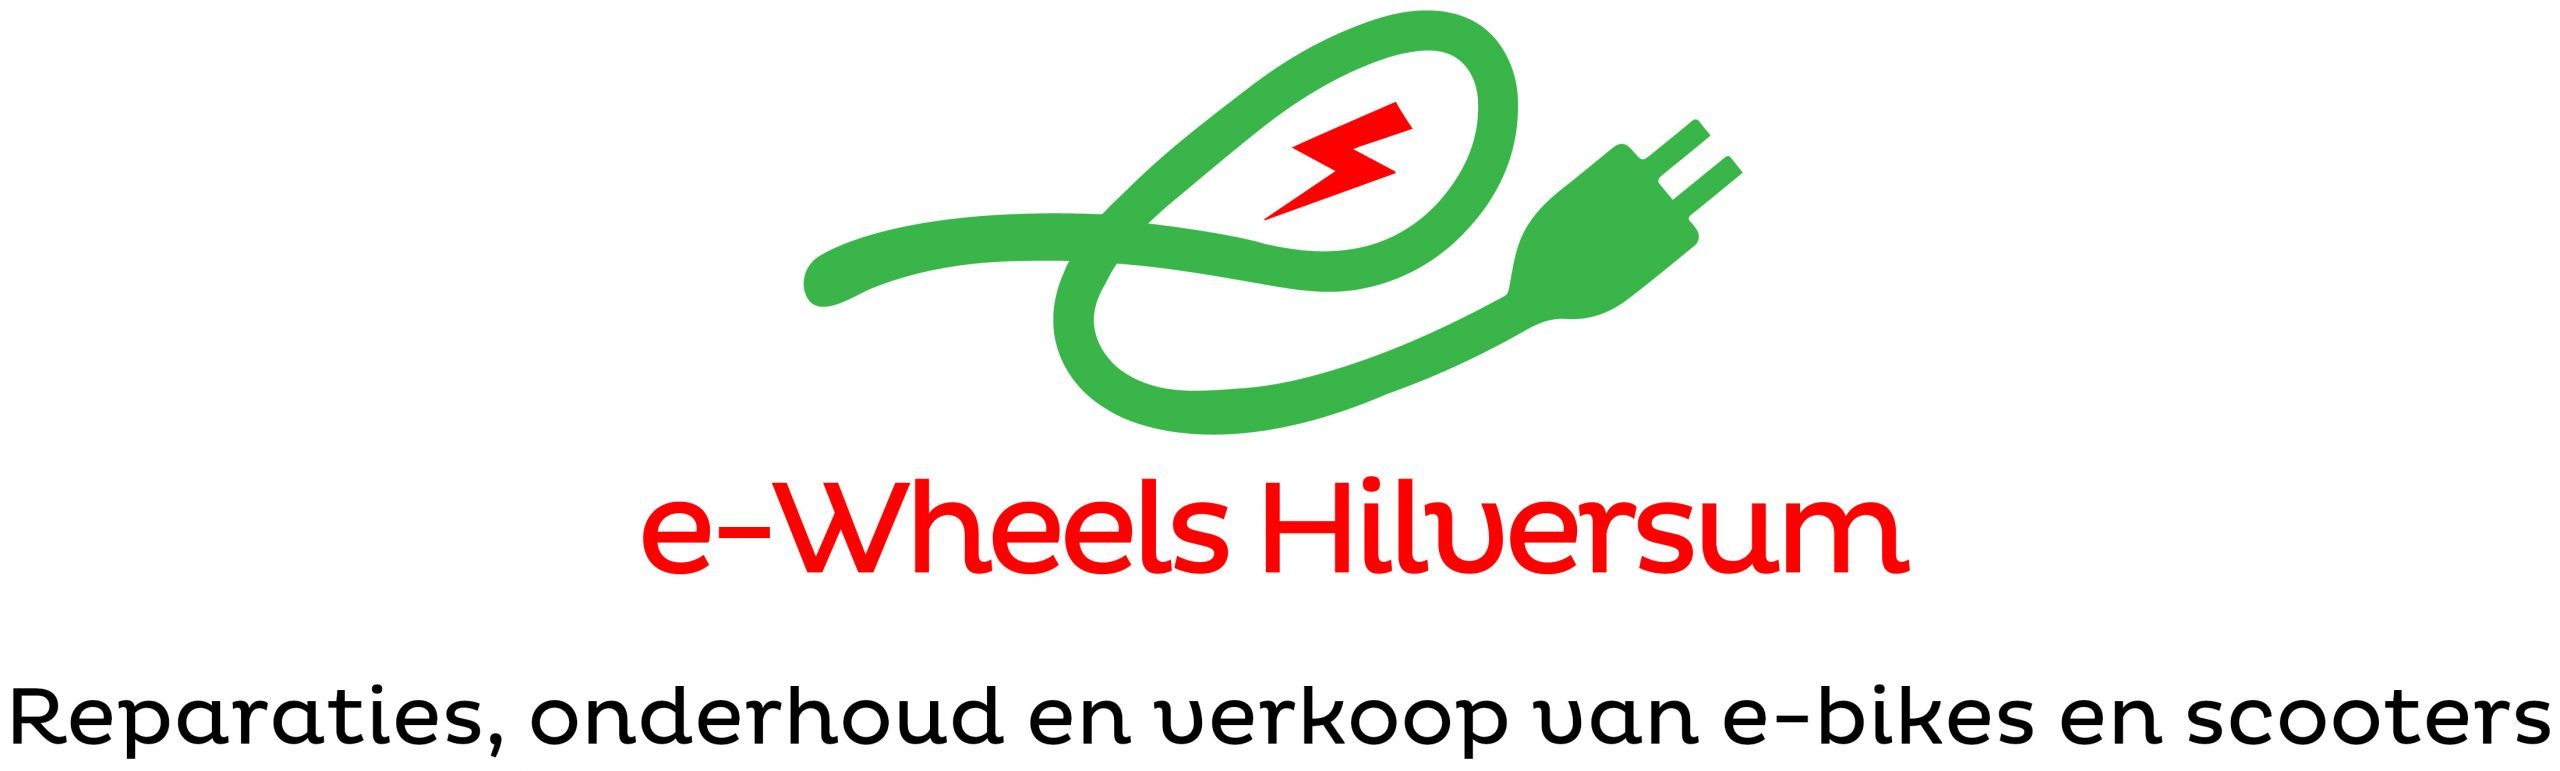 E-wheels Hilversum